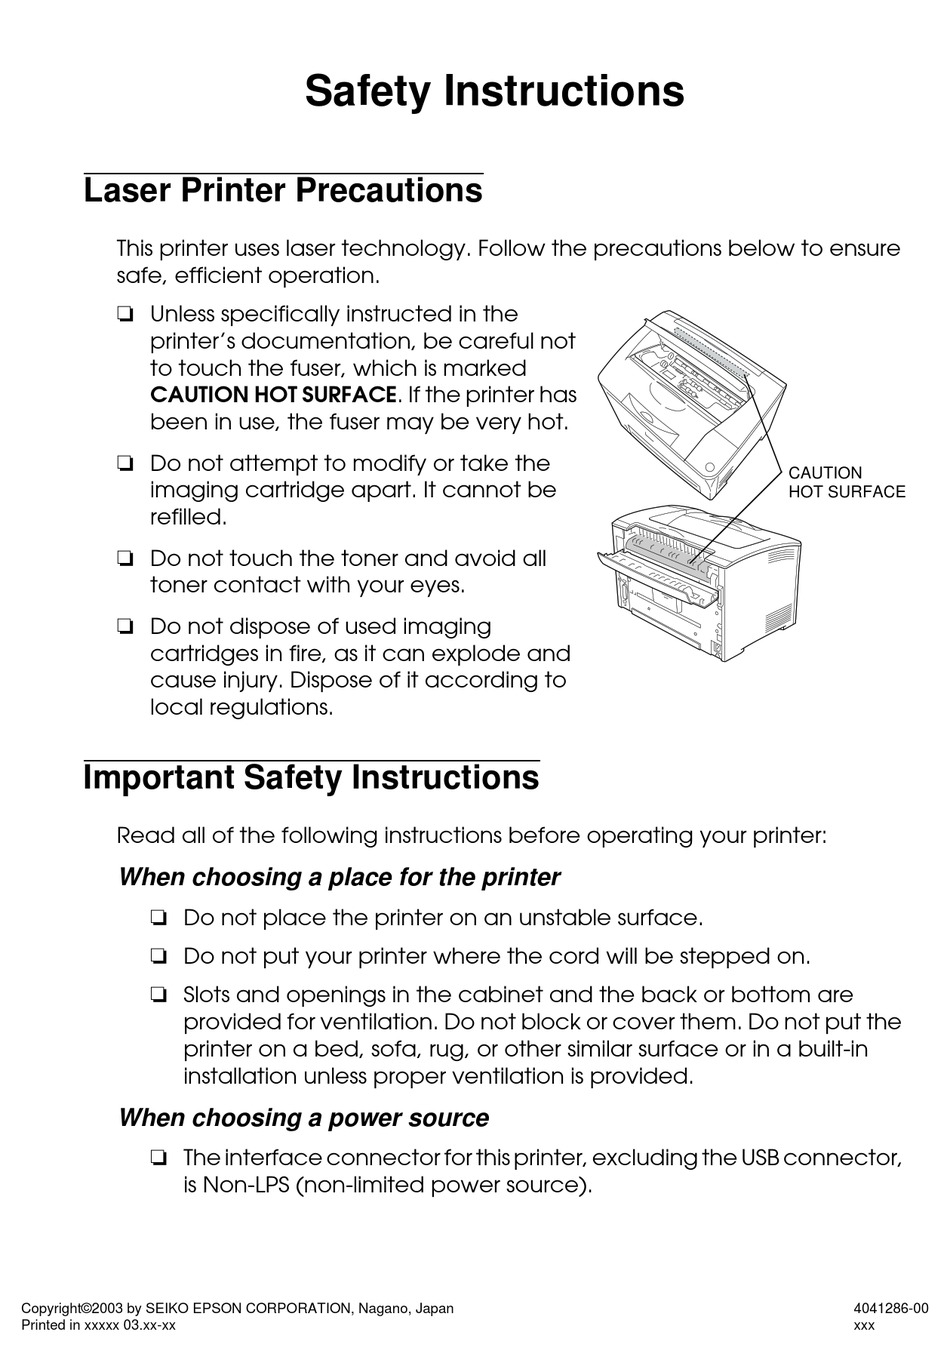 EPL-N2500 SAFETY INSTRUCTIONS Pdf | ManualsLib